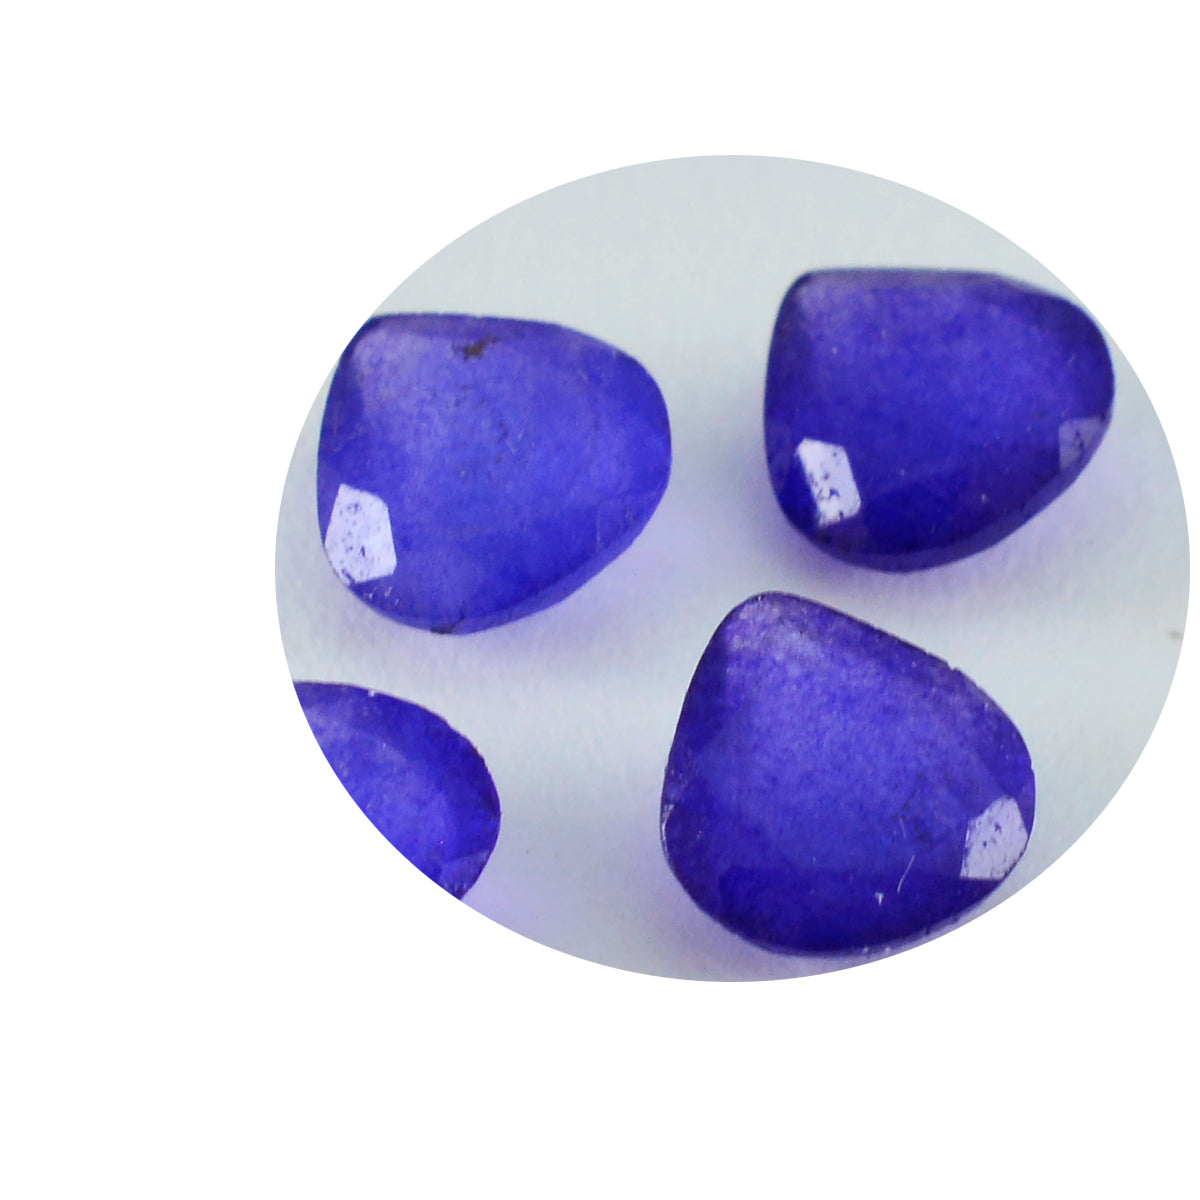 Riyogems 1PC echte blauwe jaspis gefacetteerd 11x11 mm hartvorm uitstekende kwaliteit edelsteen